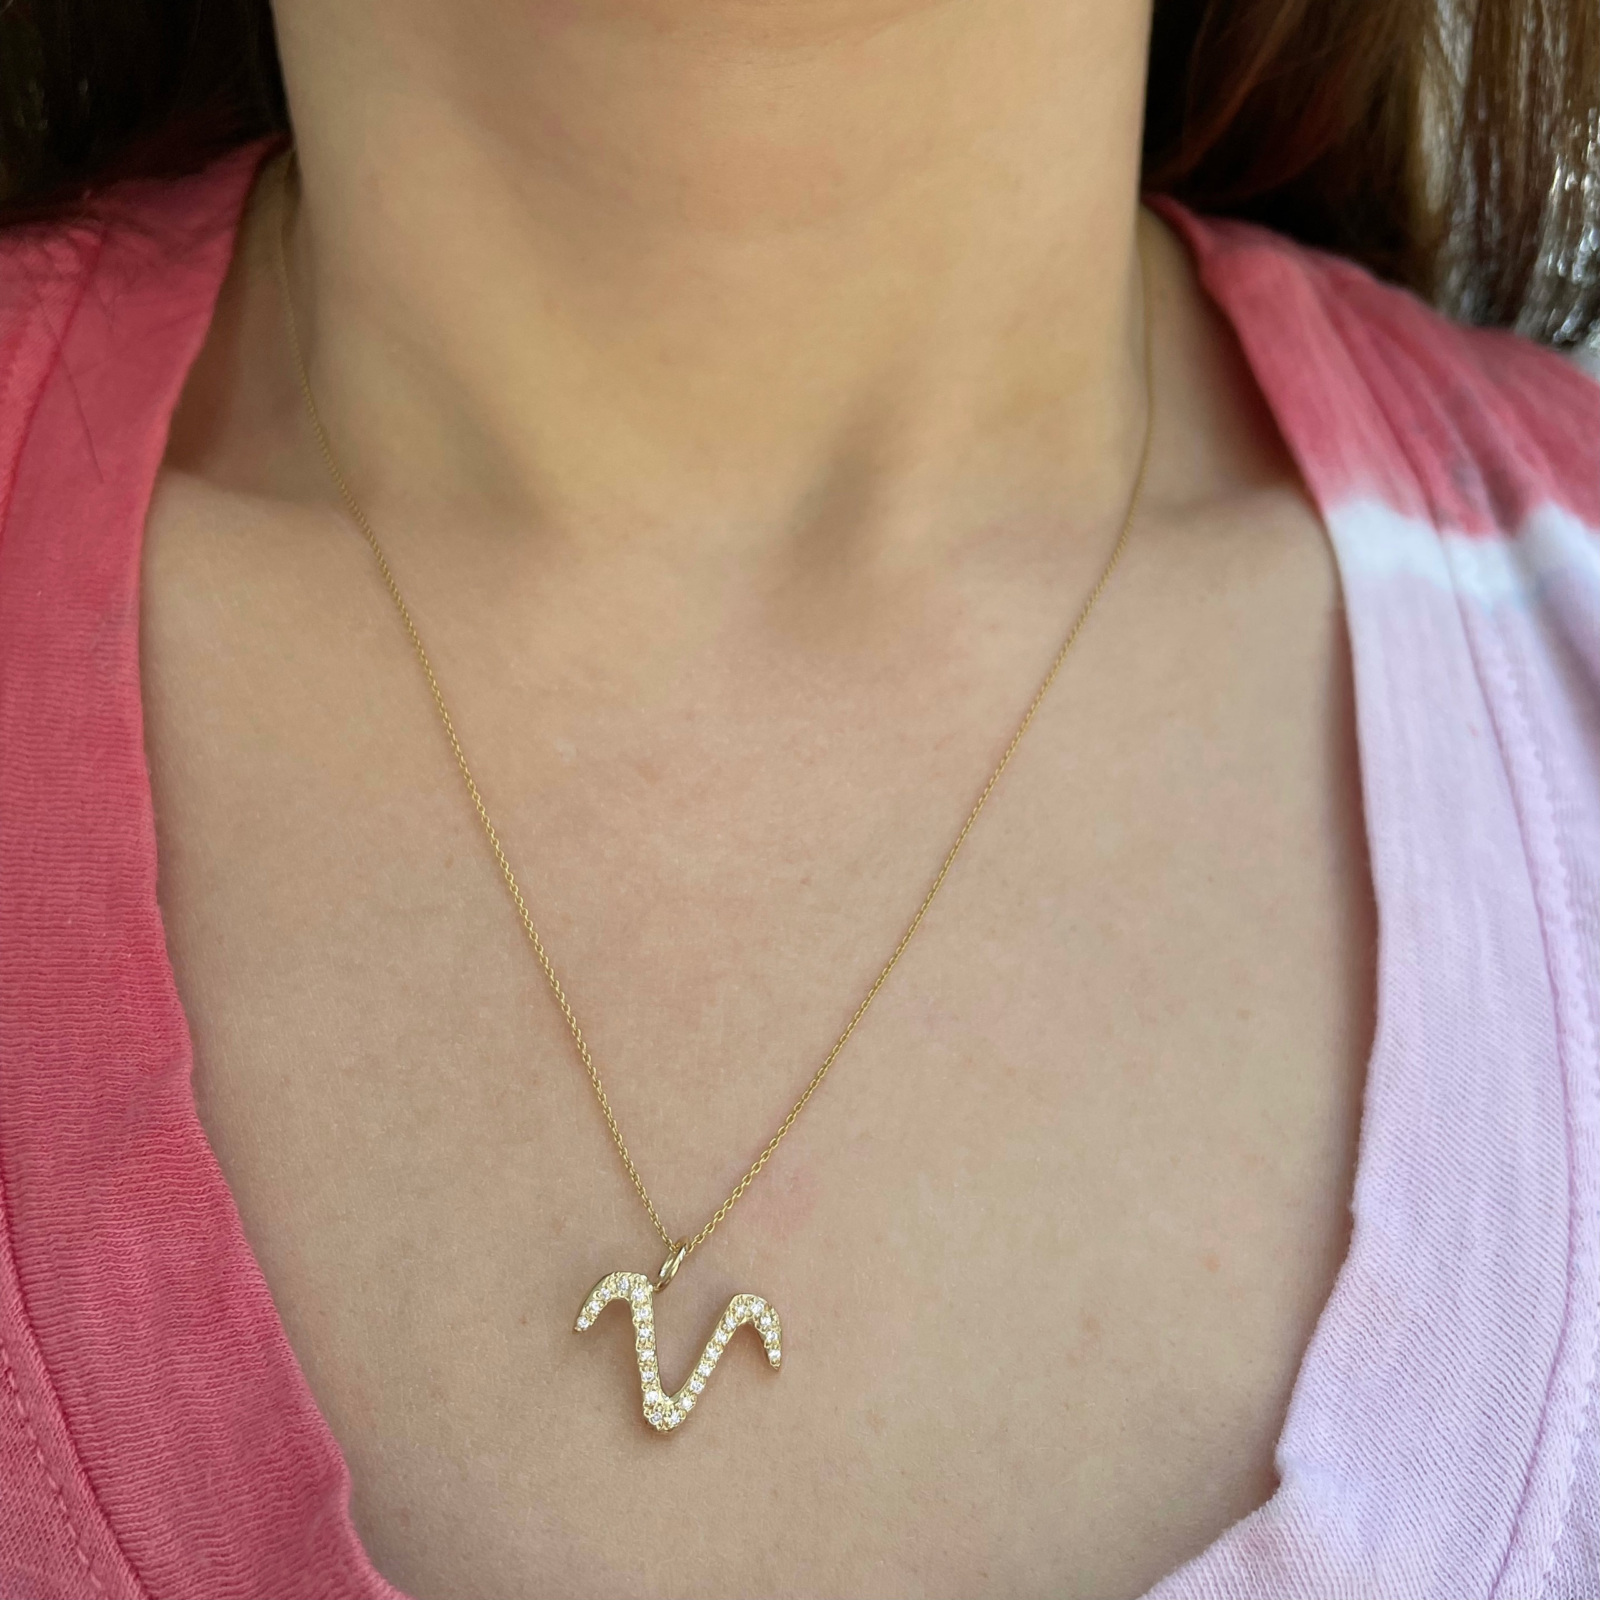 Aries zodiac sign charm pendant necklace